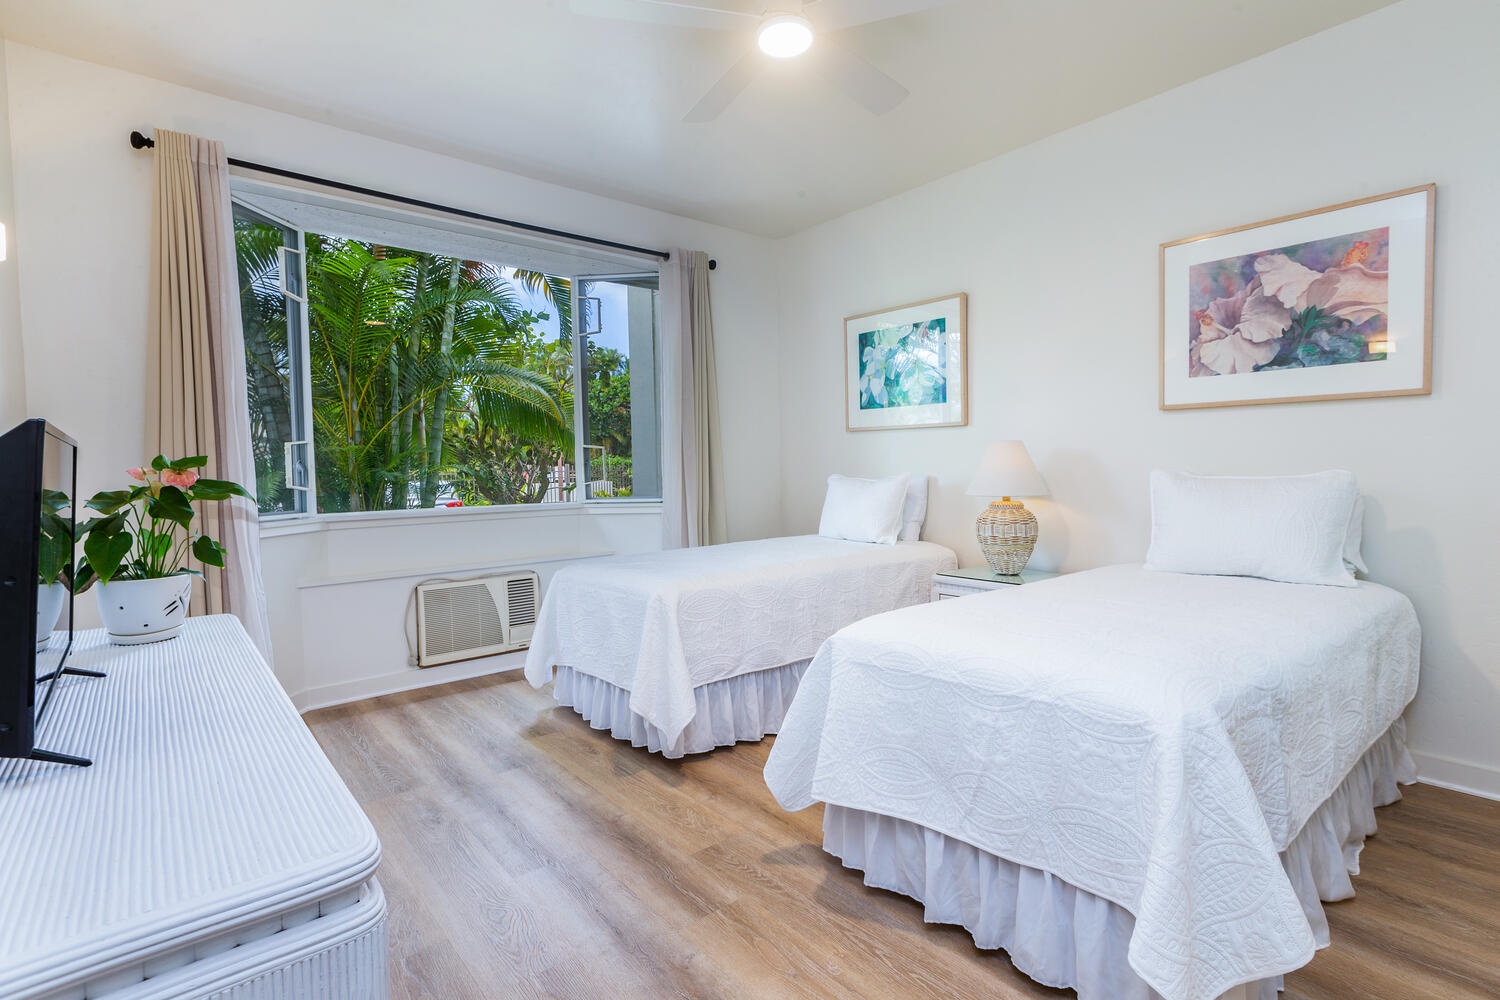 Princeville Vacation Rentals, Emmalani Court 414 - Guest bedroom has gorgeous views of the lush tropical landscape